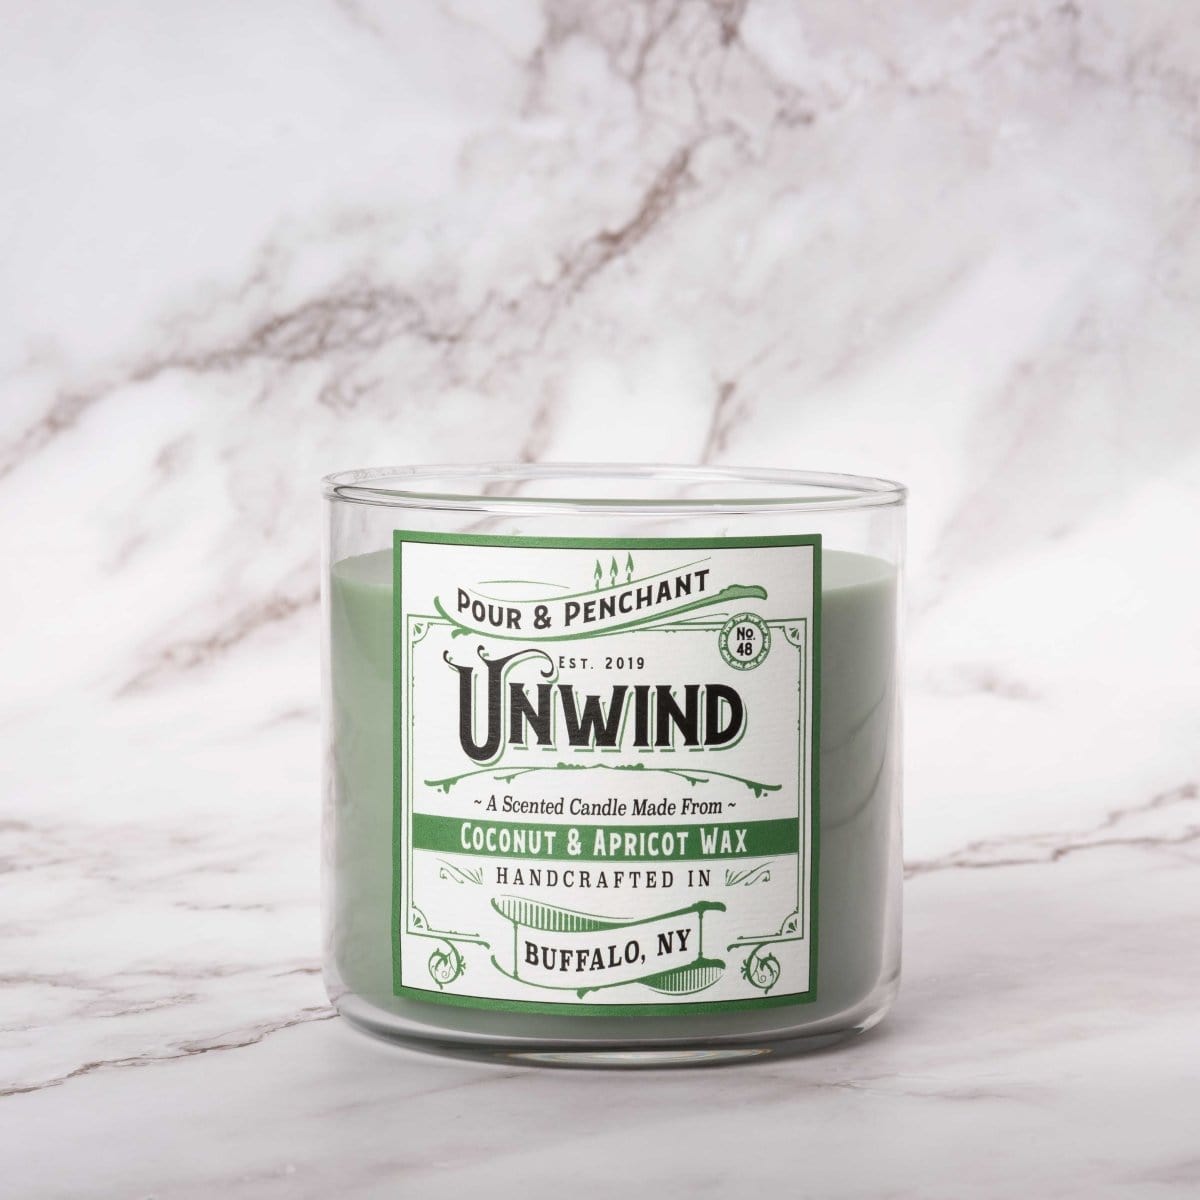 Pour & Penchant 16.5 oz Scented Candle - UNWIND no.48 - Sandalwood, Fir Balsam & White Oak